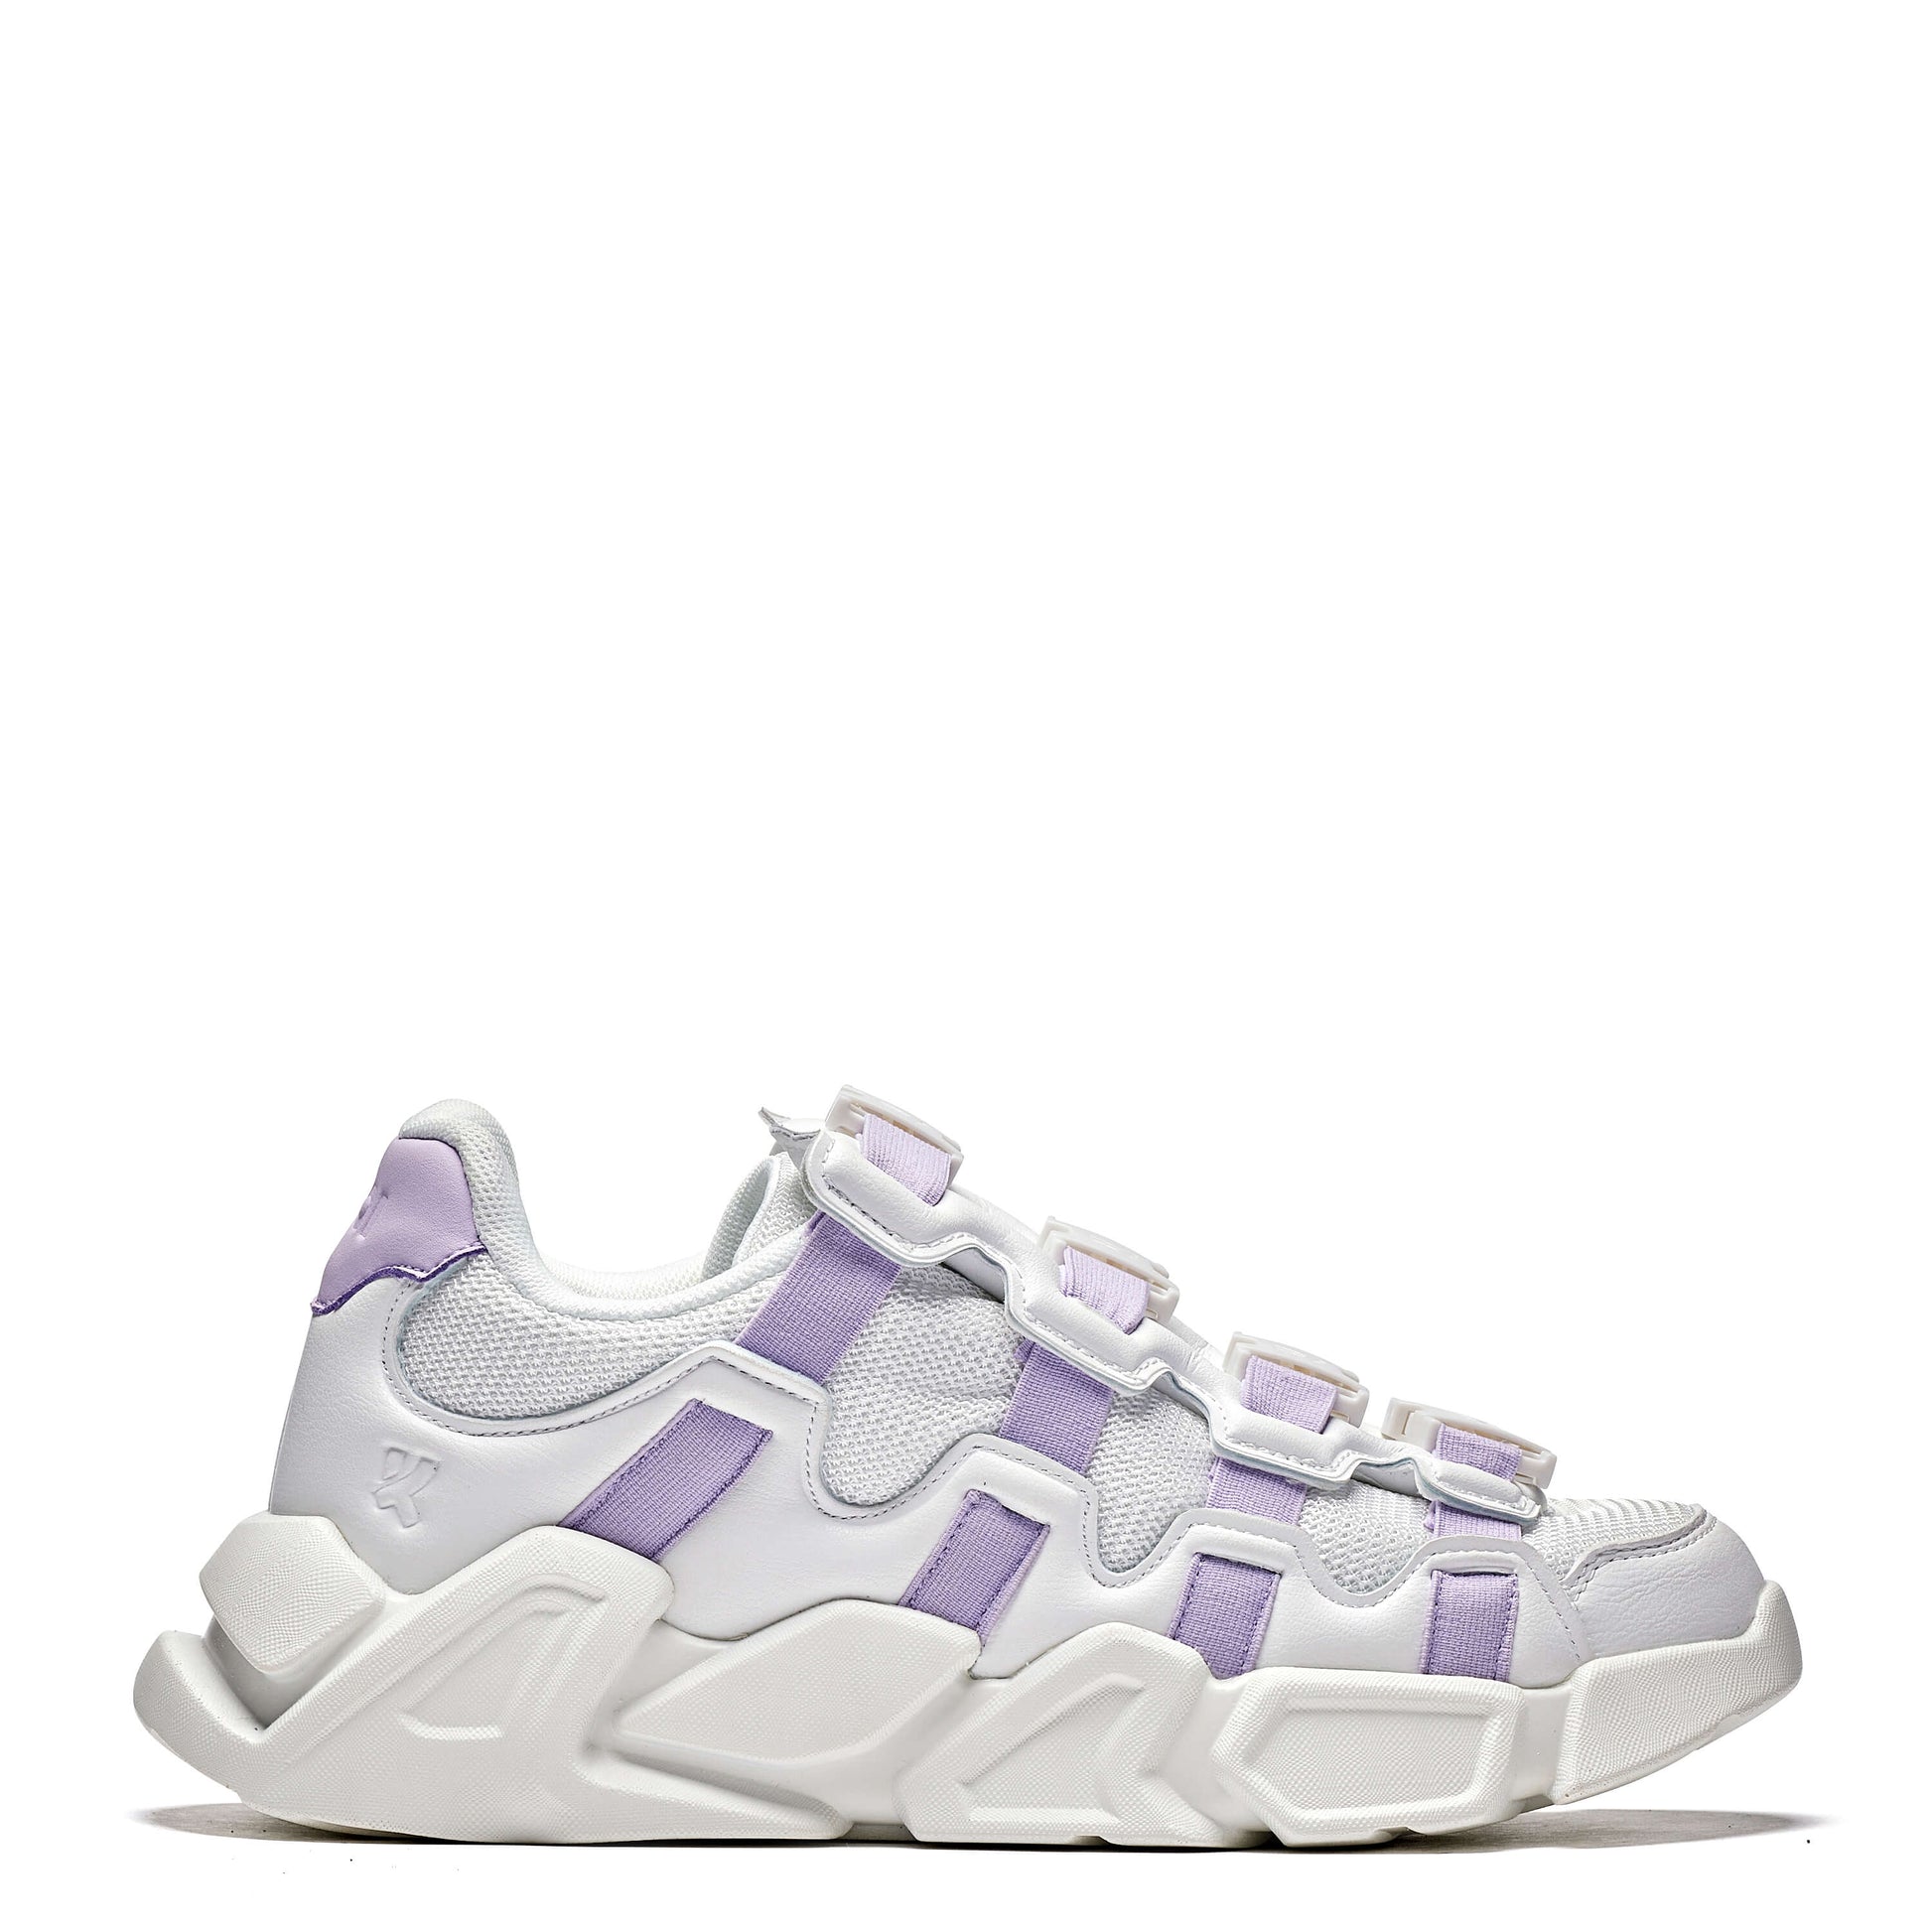 Lavender Sugar Beast Trainers - Trainers - KOI Footwear - White - Side View